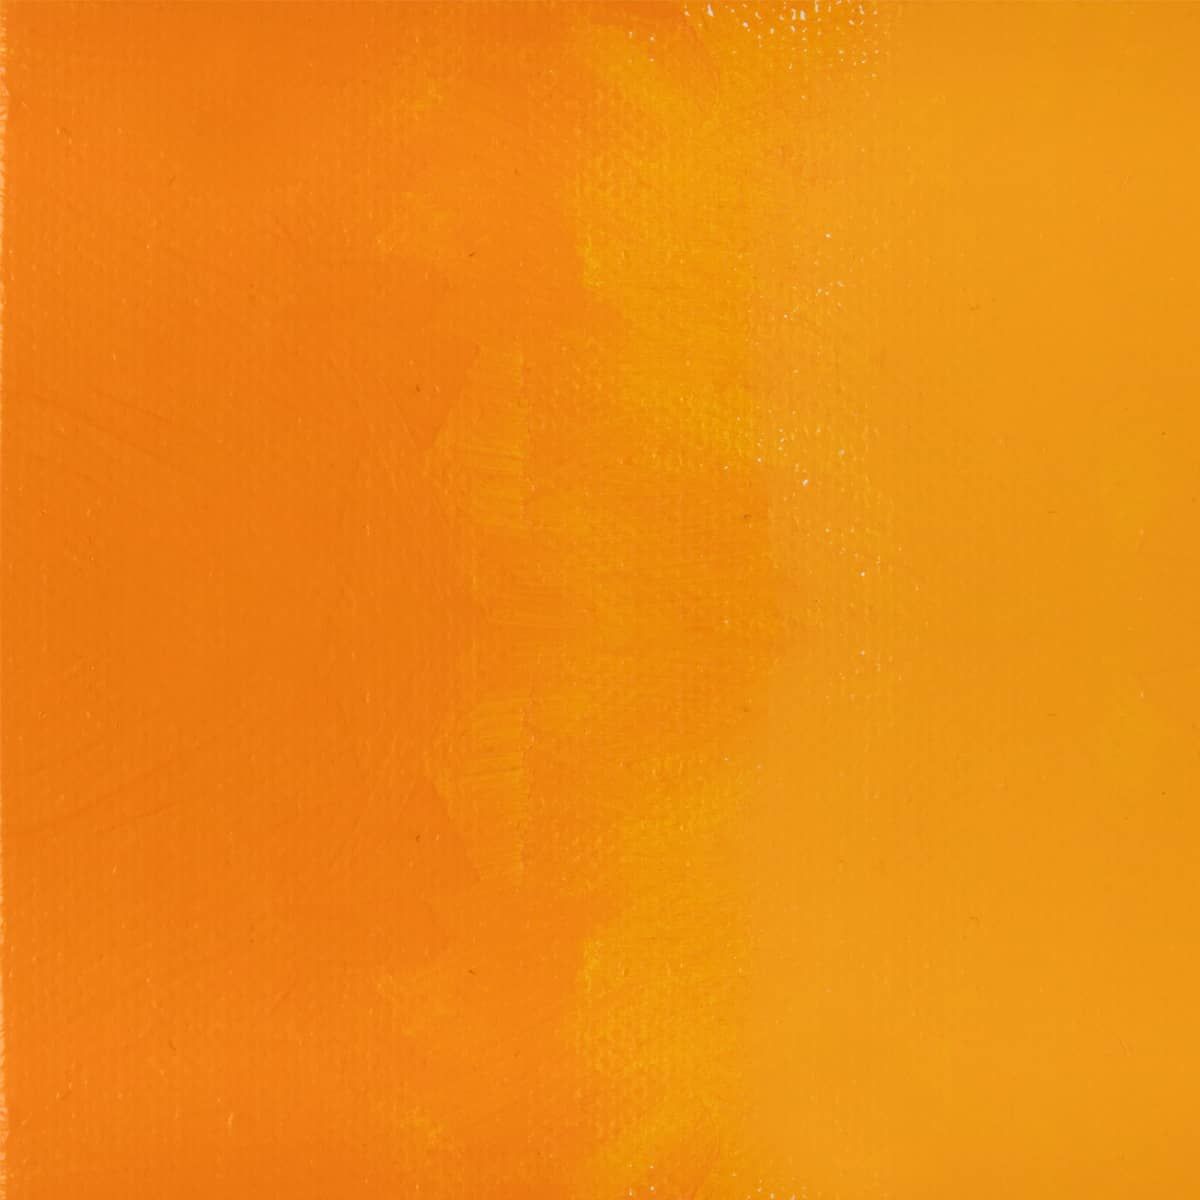 SoHo Urban Artists Heavy Body Acrylic Cadmium Orange Hue 500ml